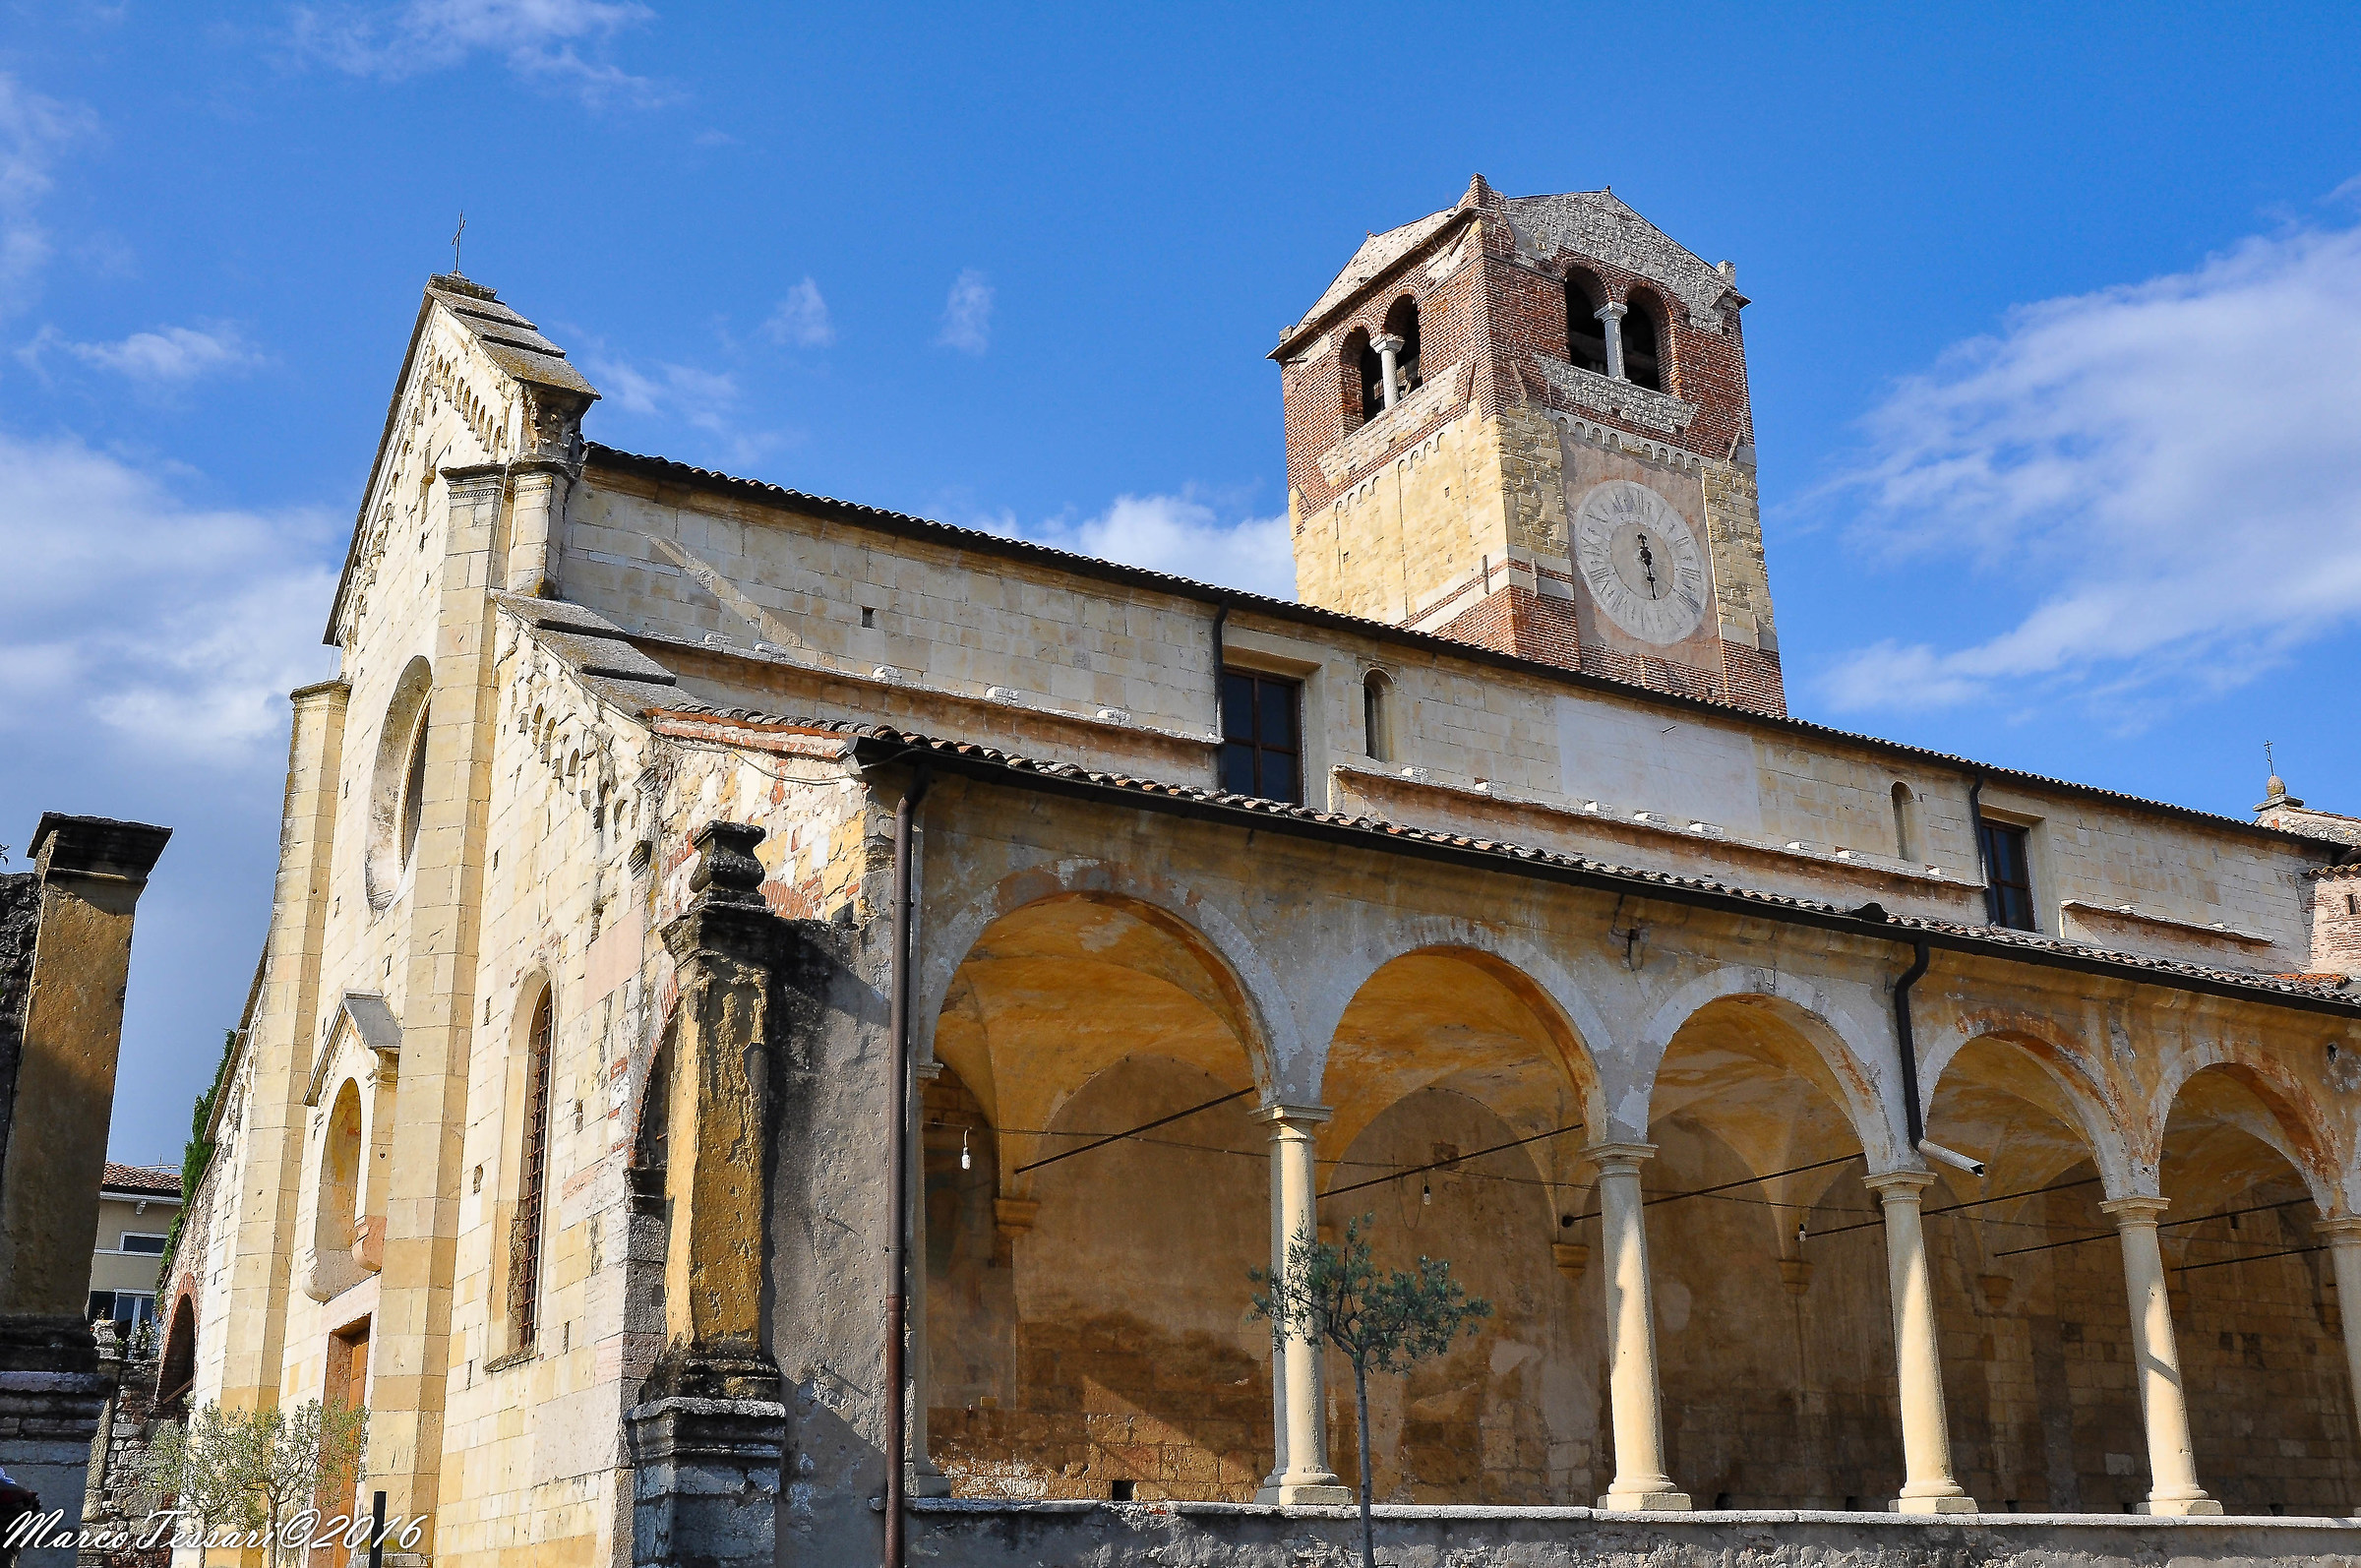 The St. Florian's church in Valpolicella - Verona...